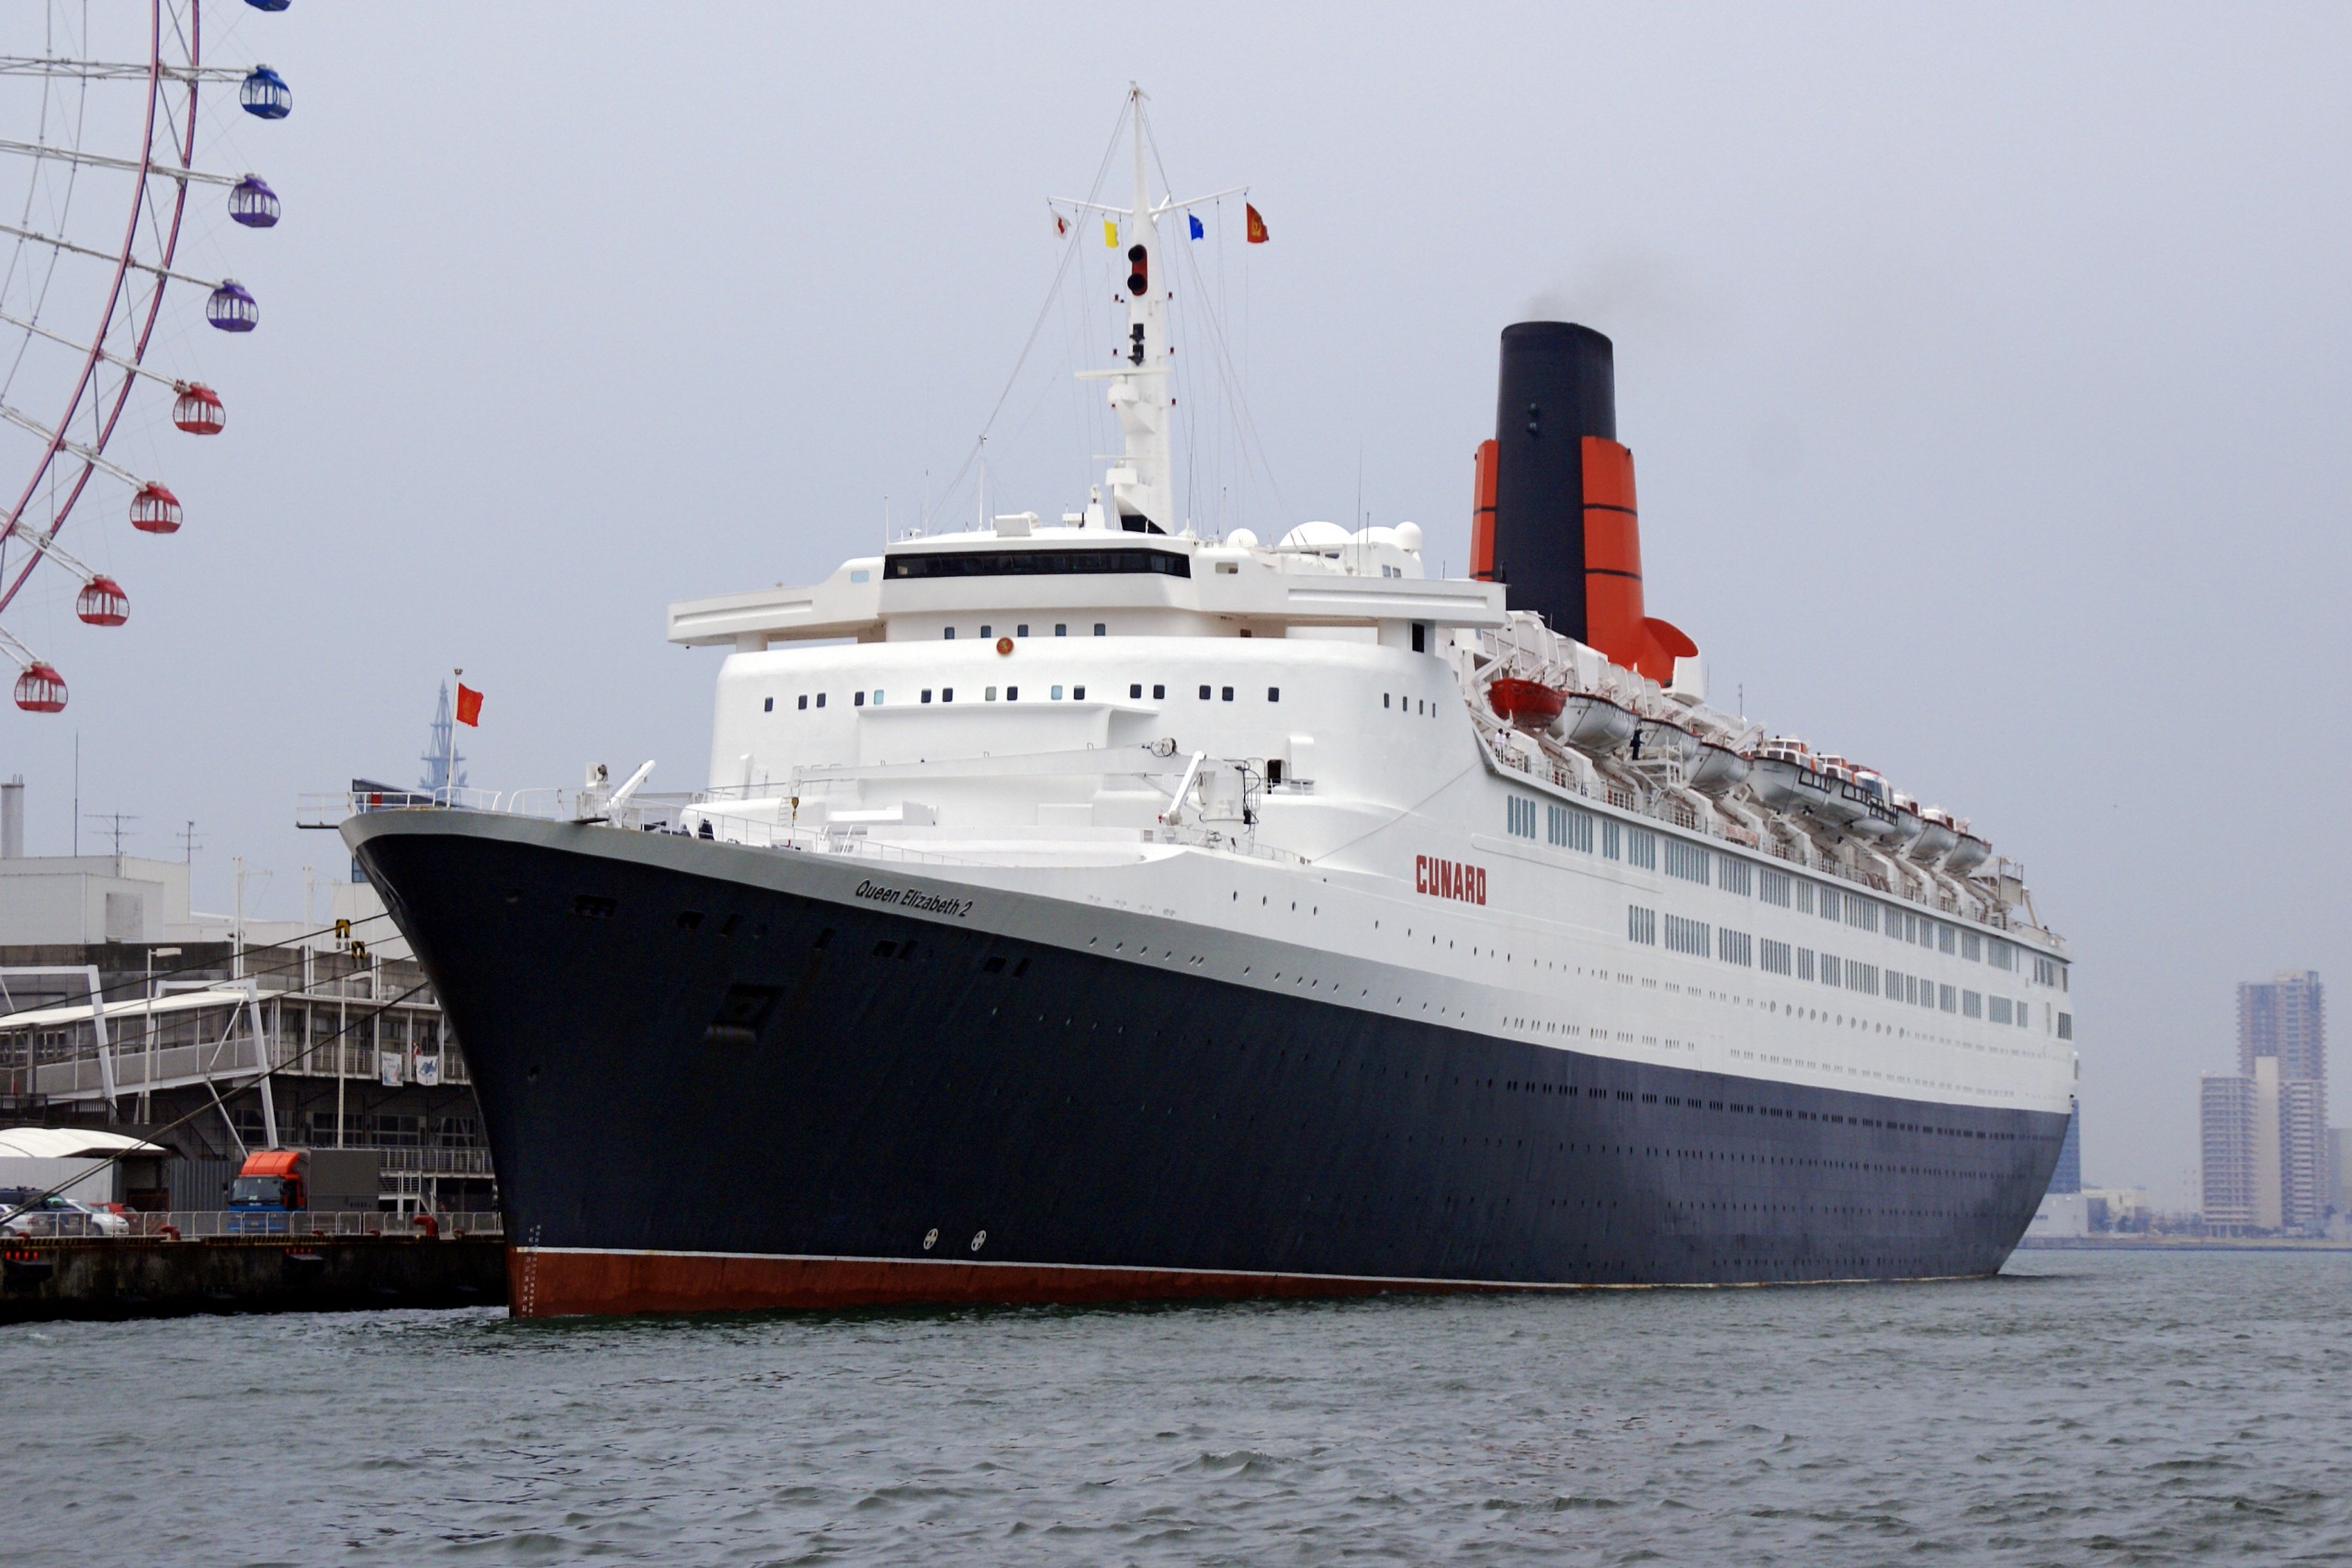 Osaka RMS Queen Elizabeth2 (Wikipédia)